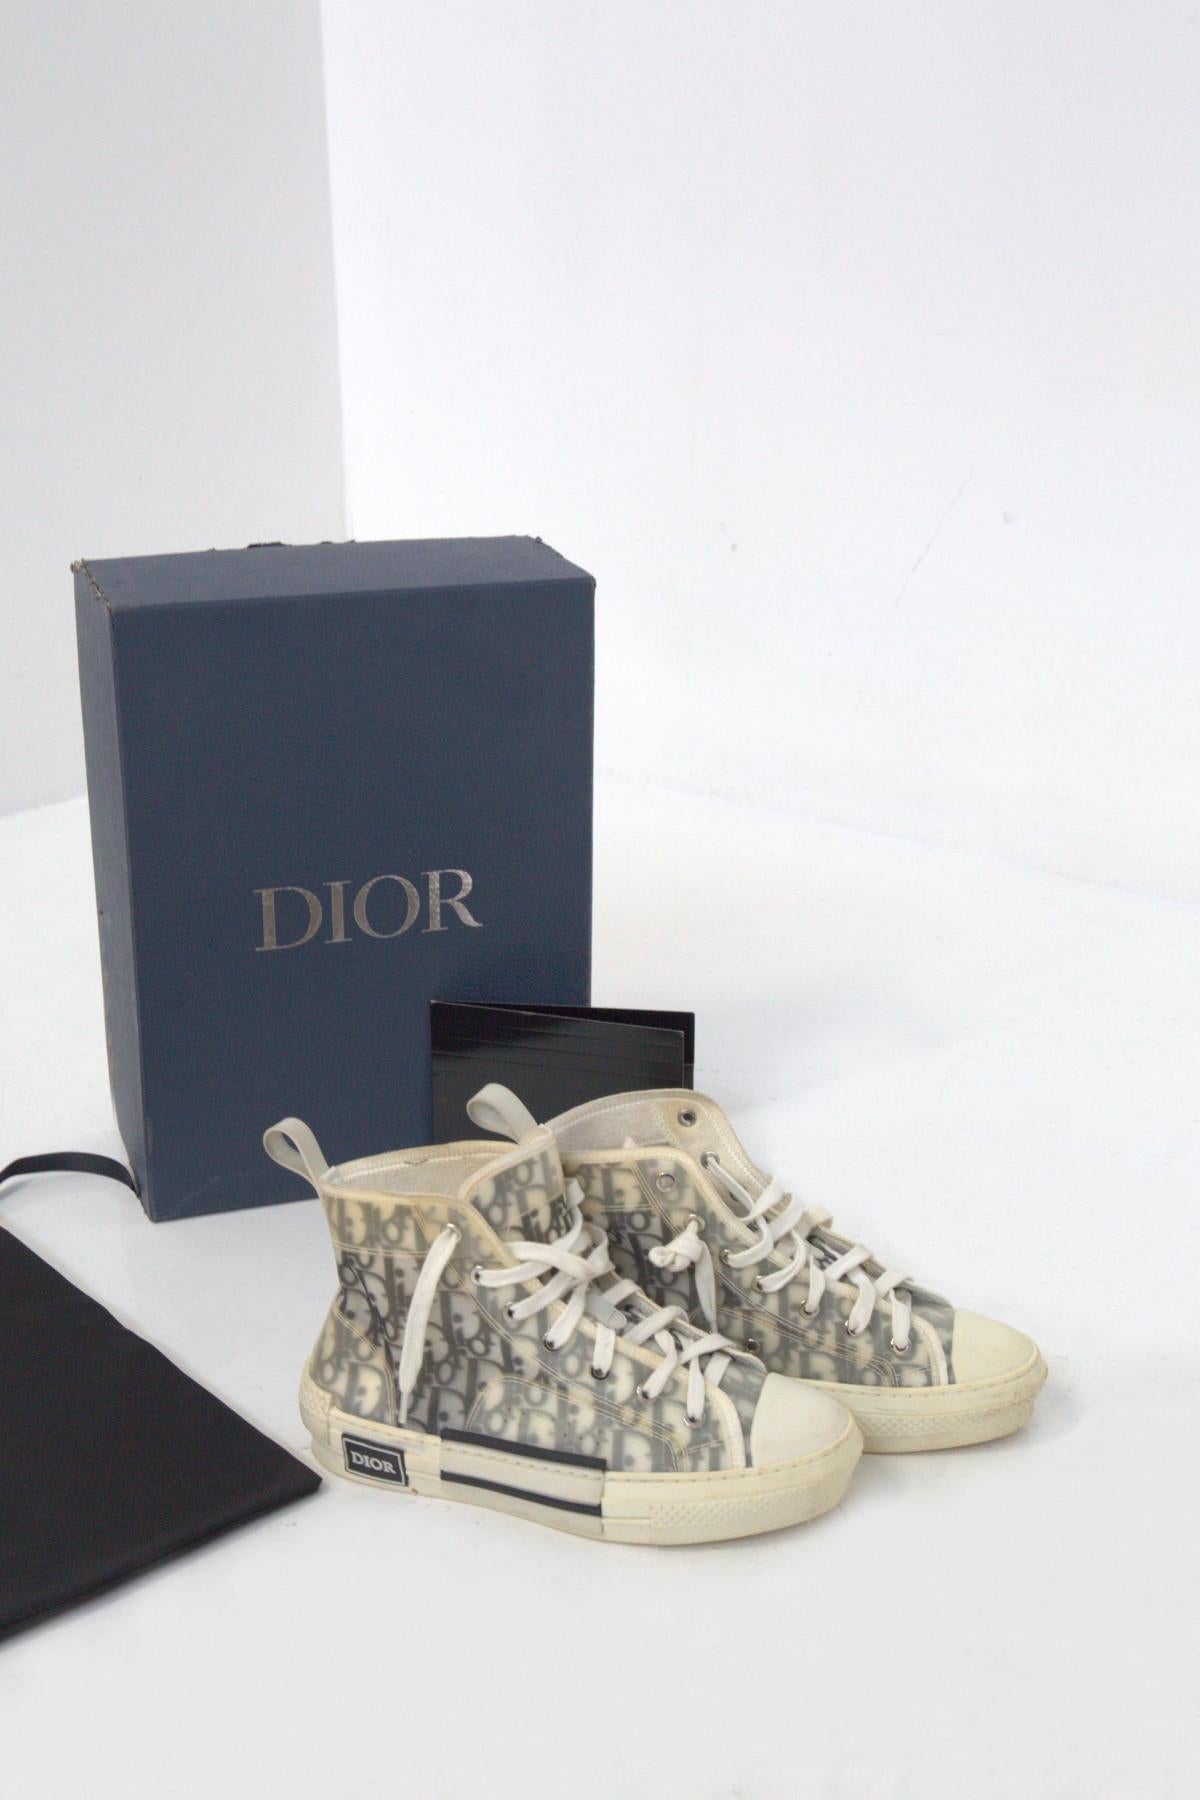 Christian Dior Turnschuhe B23 mit hohem Weiß (Grau) im Angebot